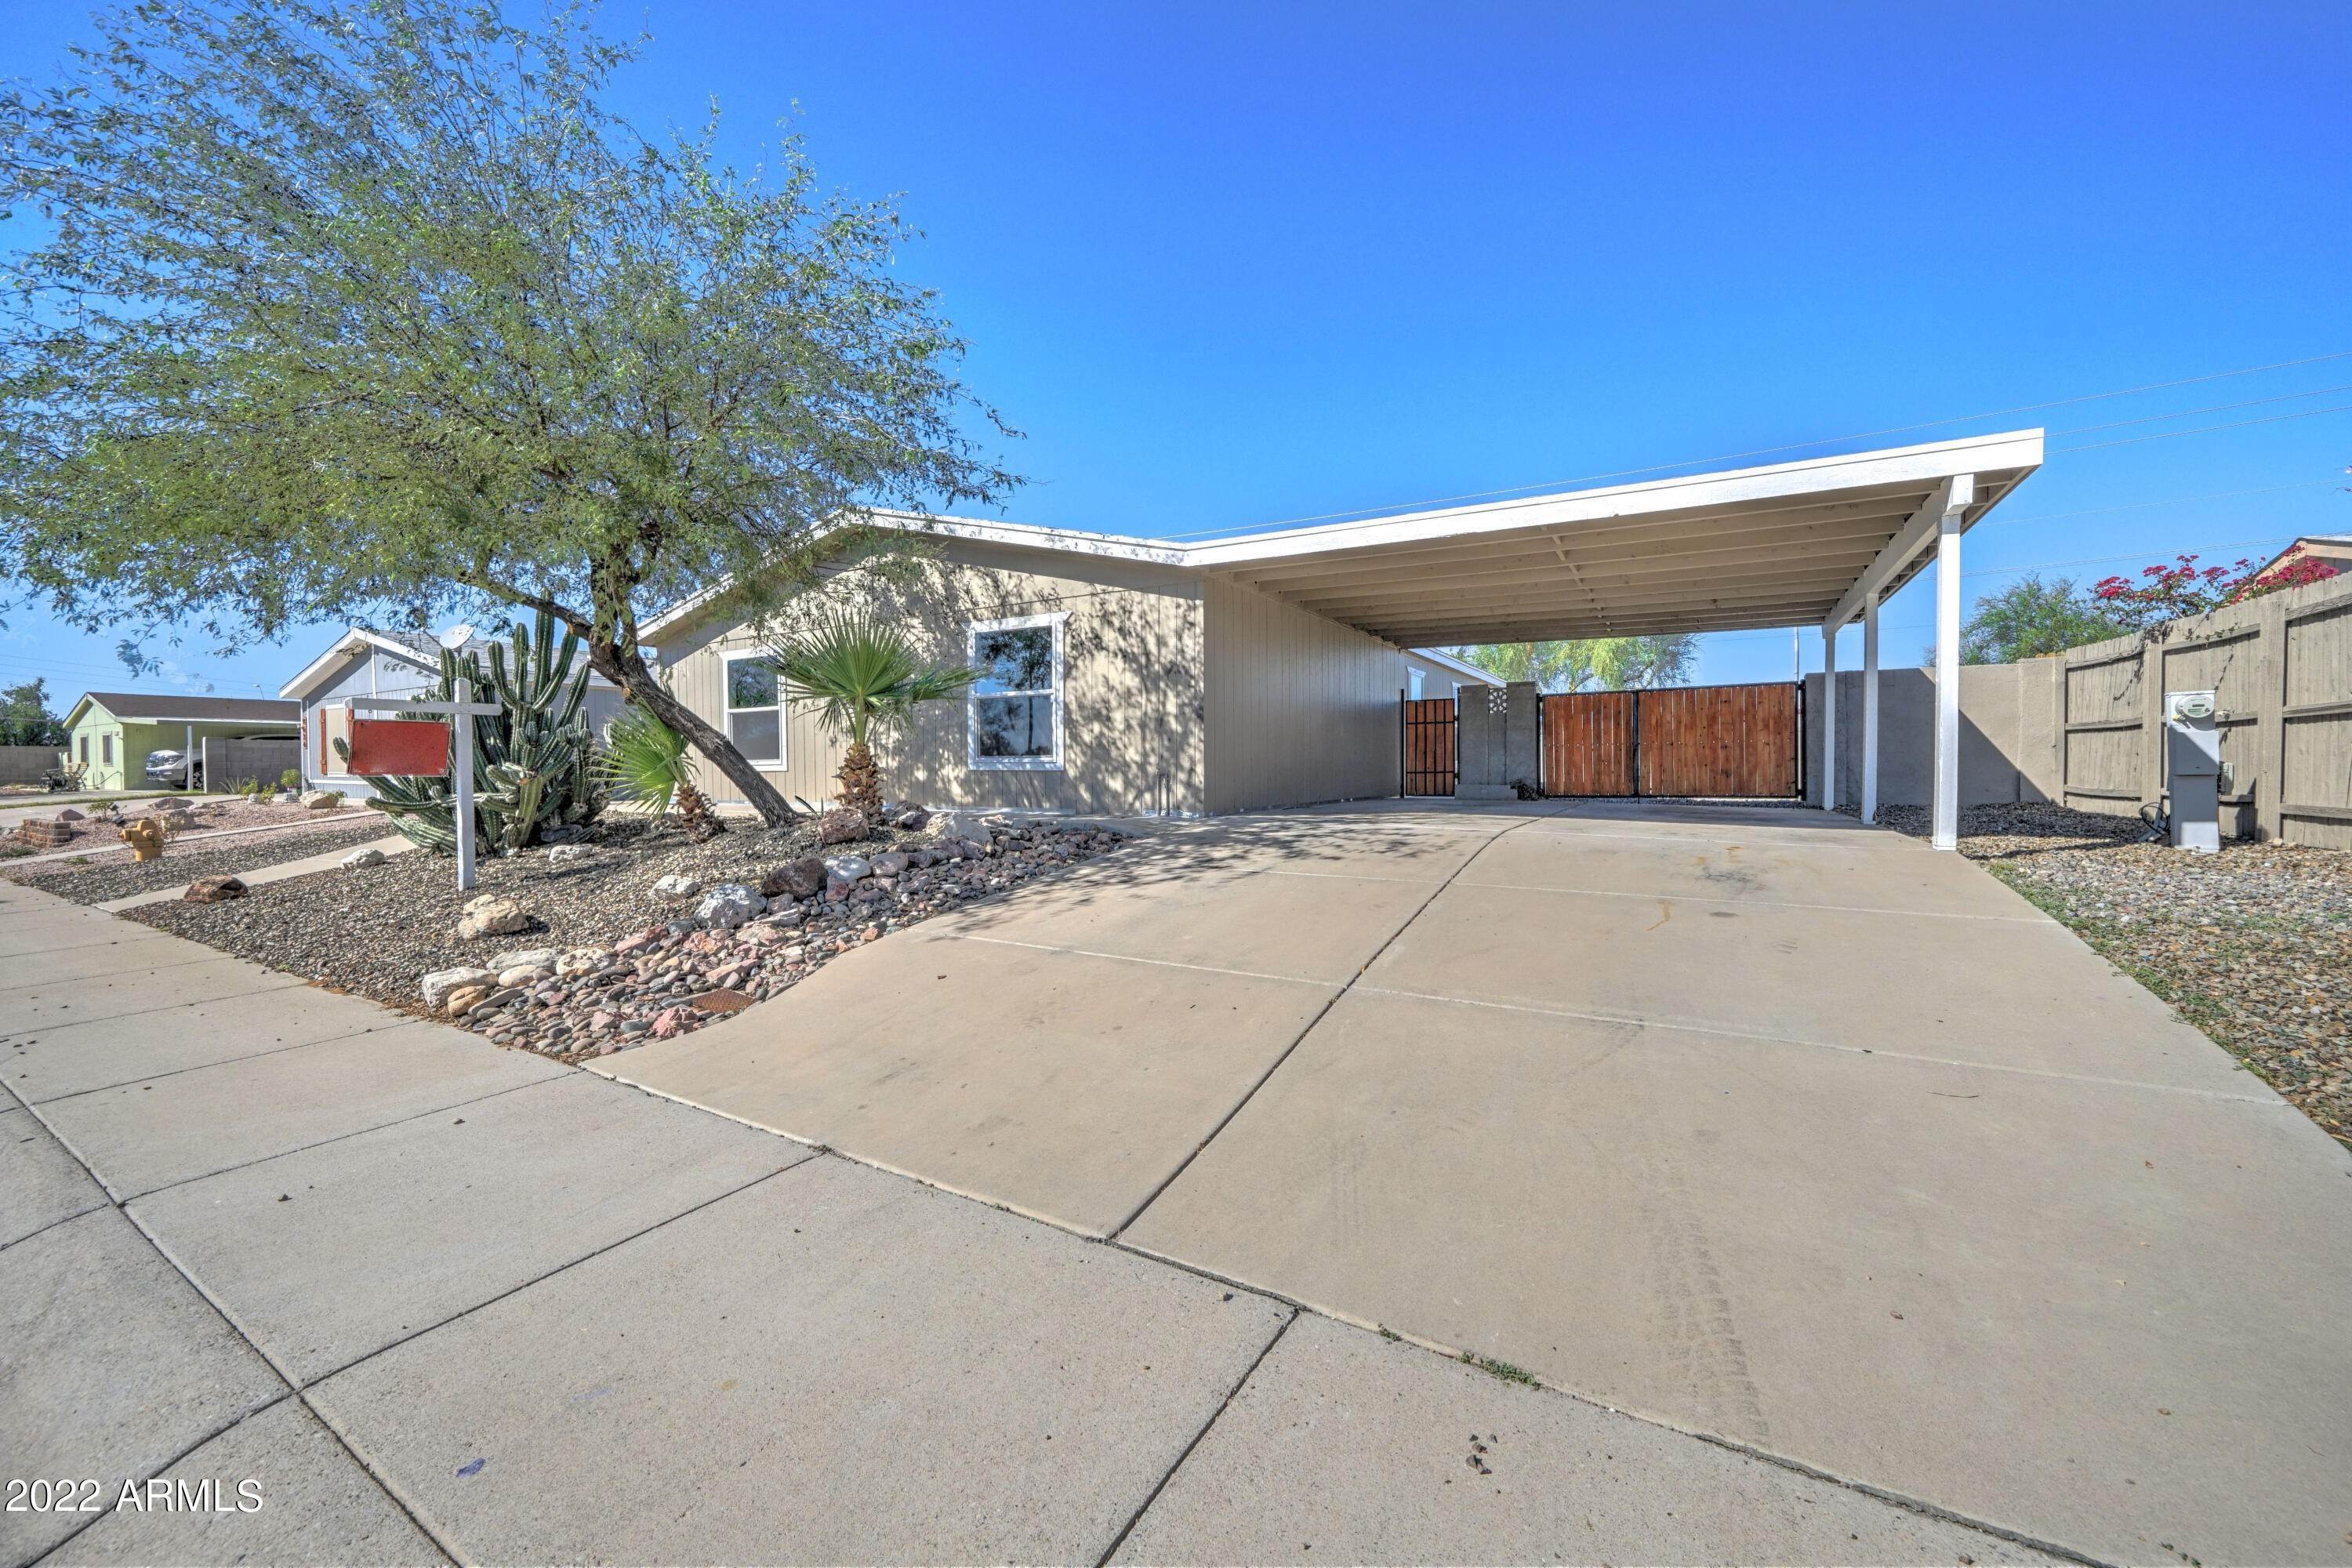 36. Mobile Home for Sale at Mesa, AZ 85208